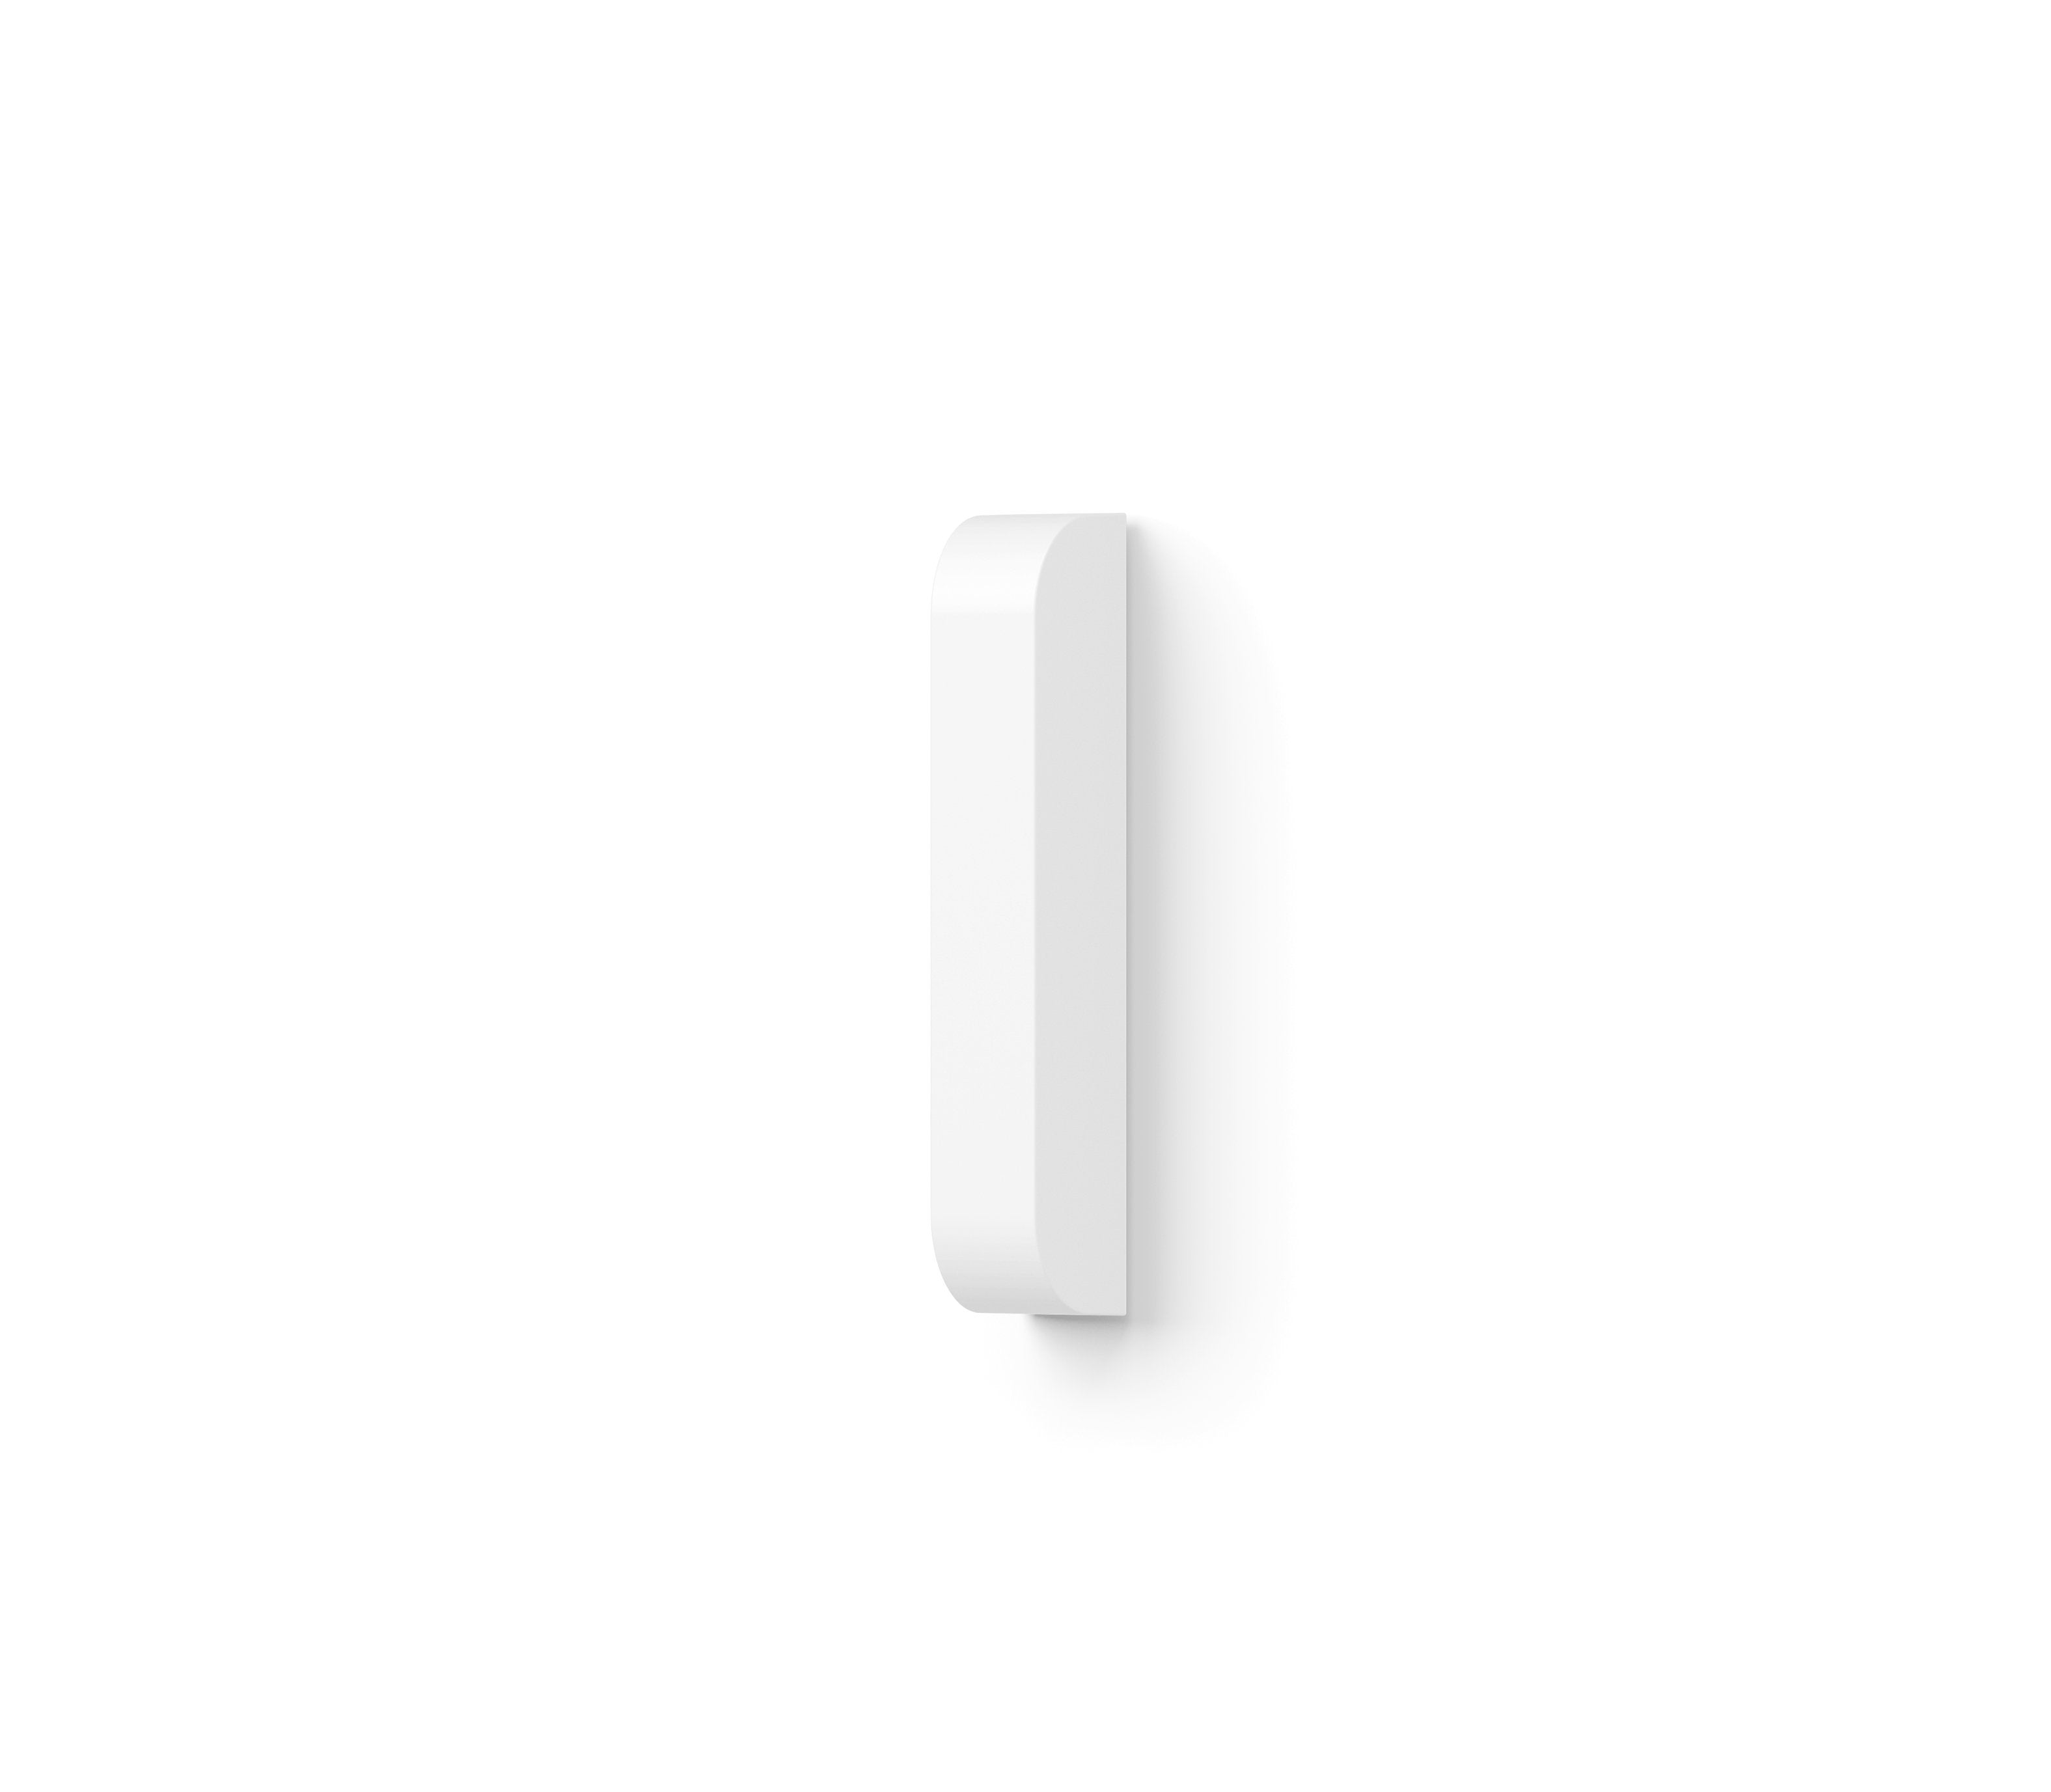 Gætte Sway væske Open Window Magnet | Smart Home Security Accessories | Ring